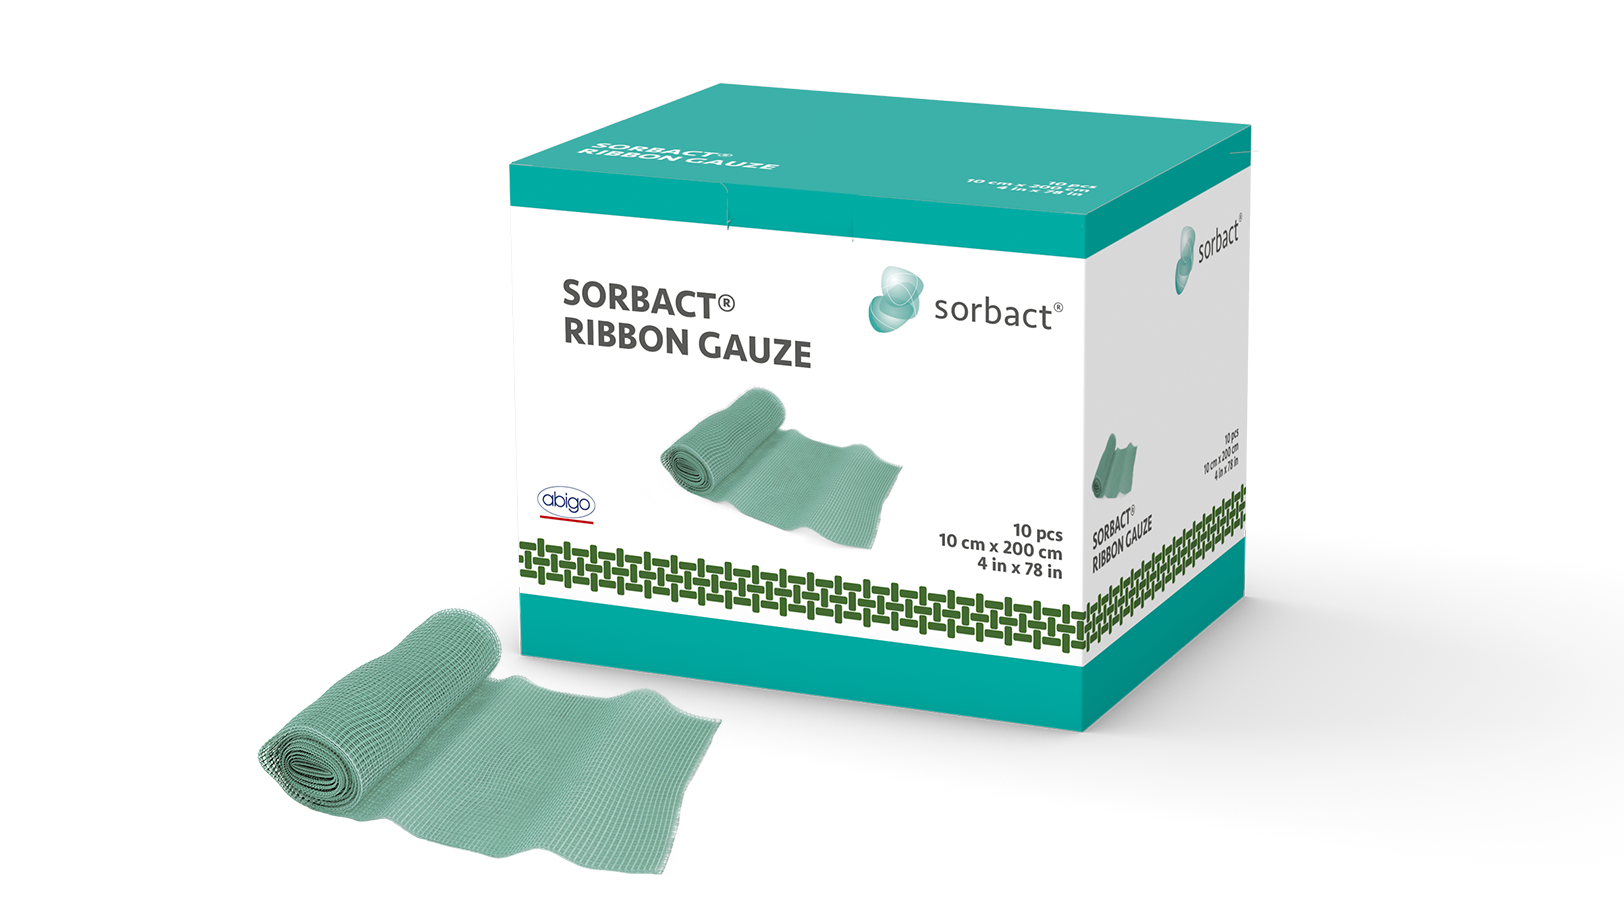 sorbact-ribbon-gauze-1624x901-2020